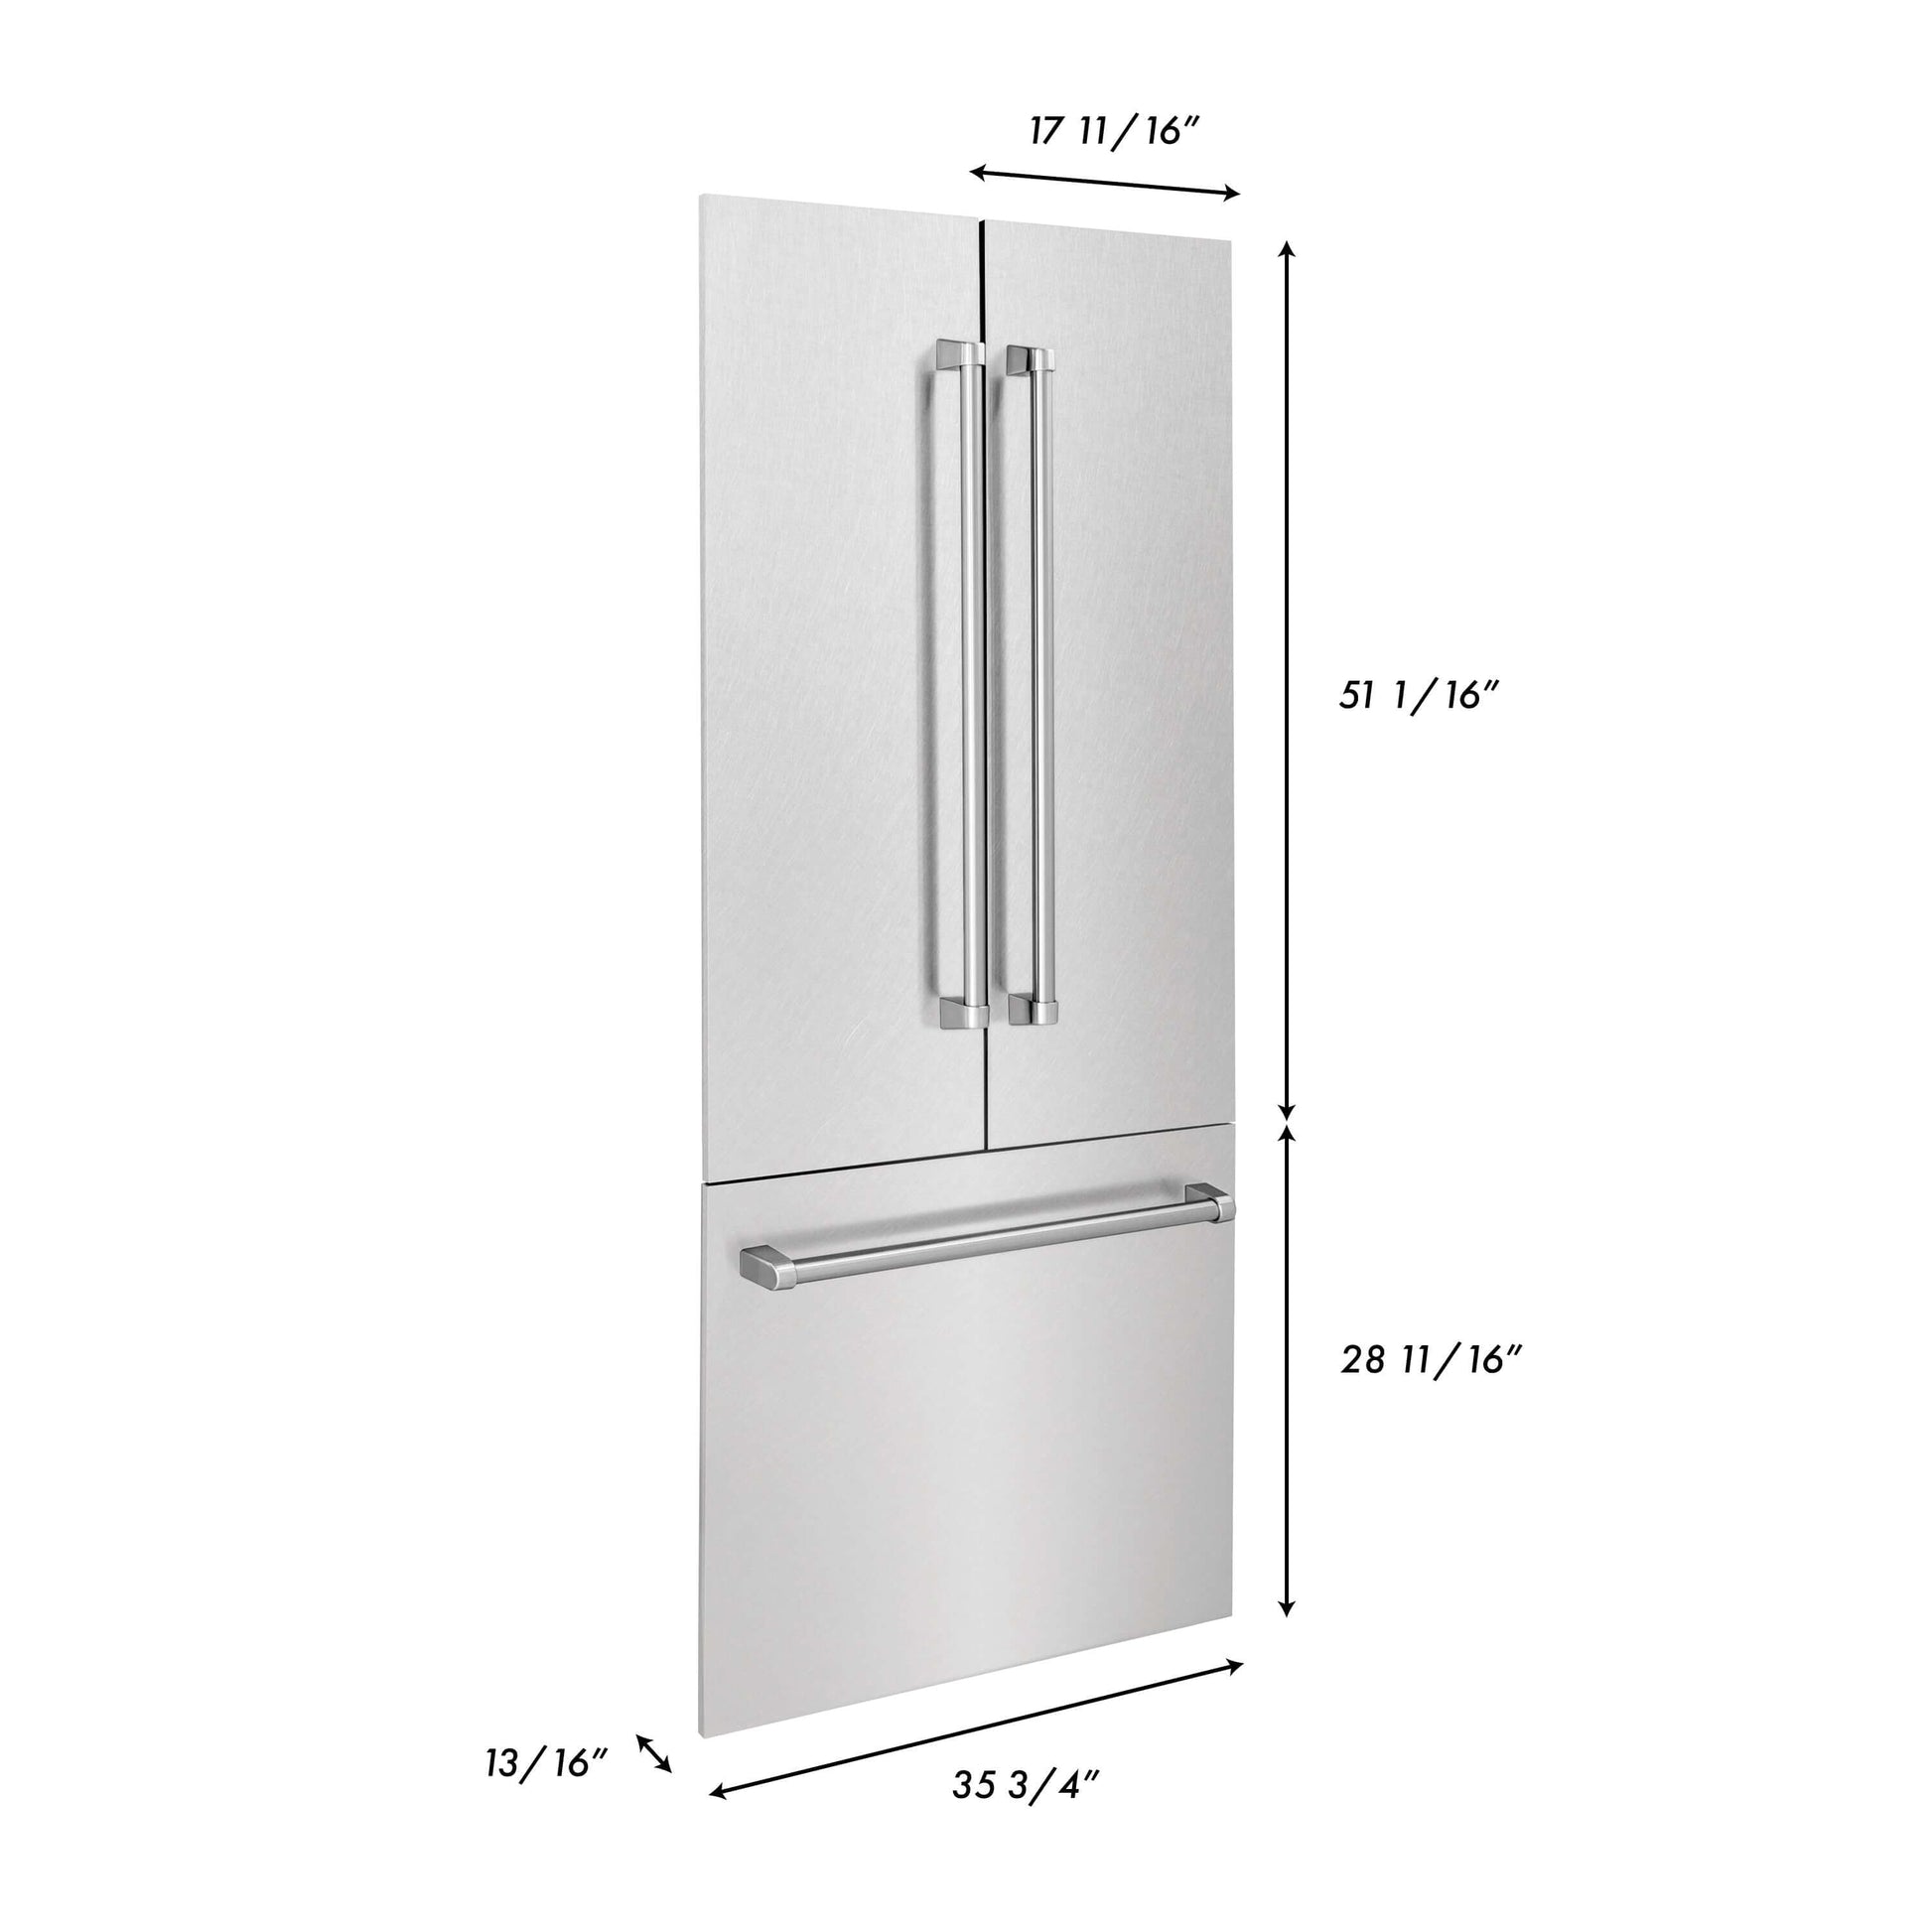 Panels & Handles Only - ZLINE 36" Refrigerator Panels in DuraSnow Stainless Steel